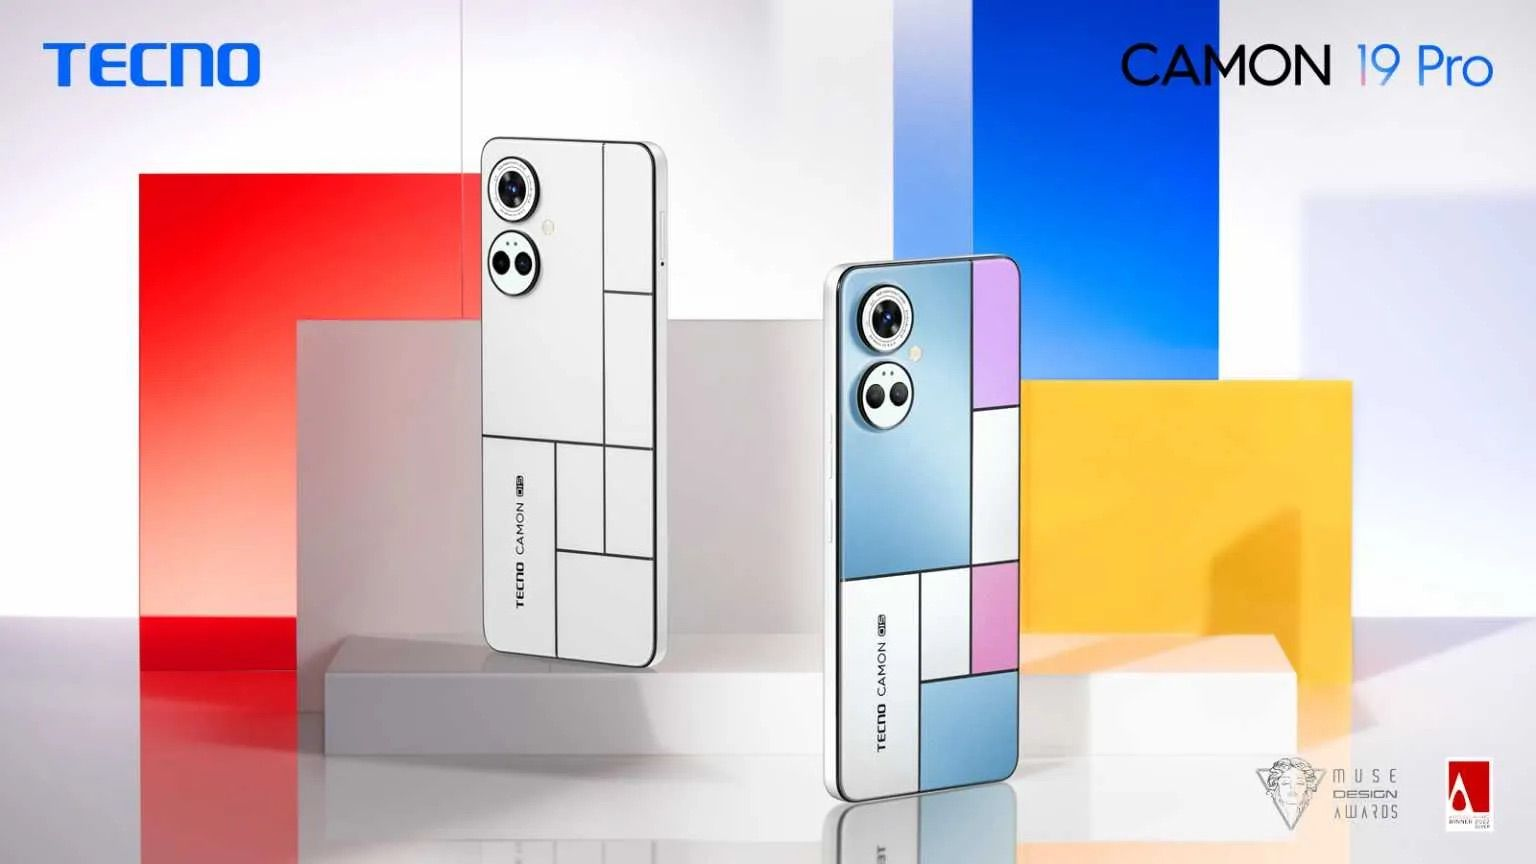 Tecno Camon 19 Pro Mondrian Edition now available in India